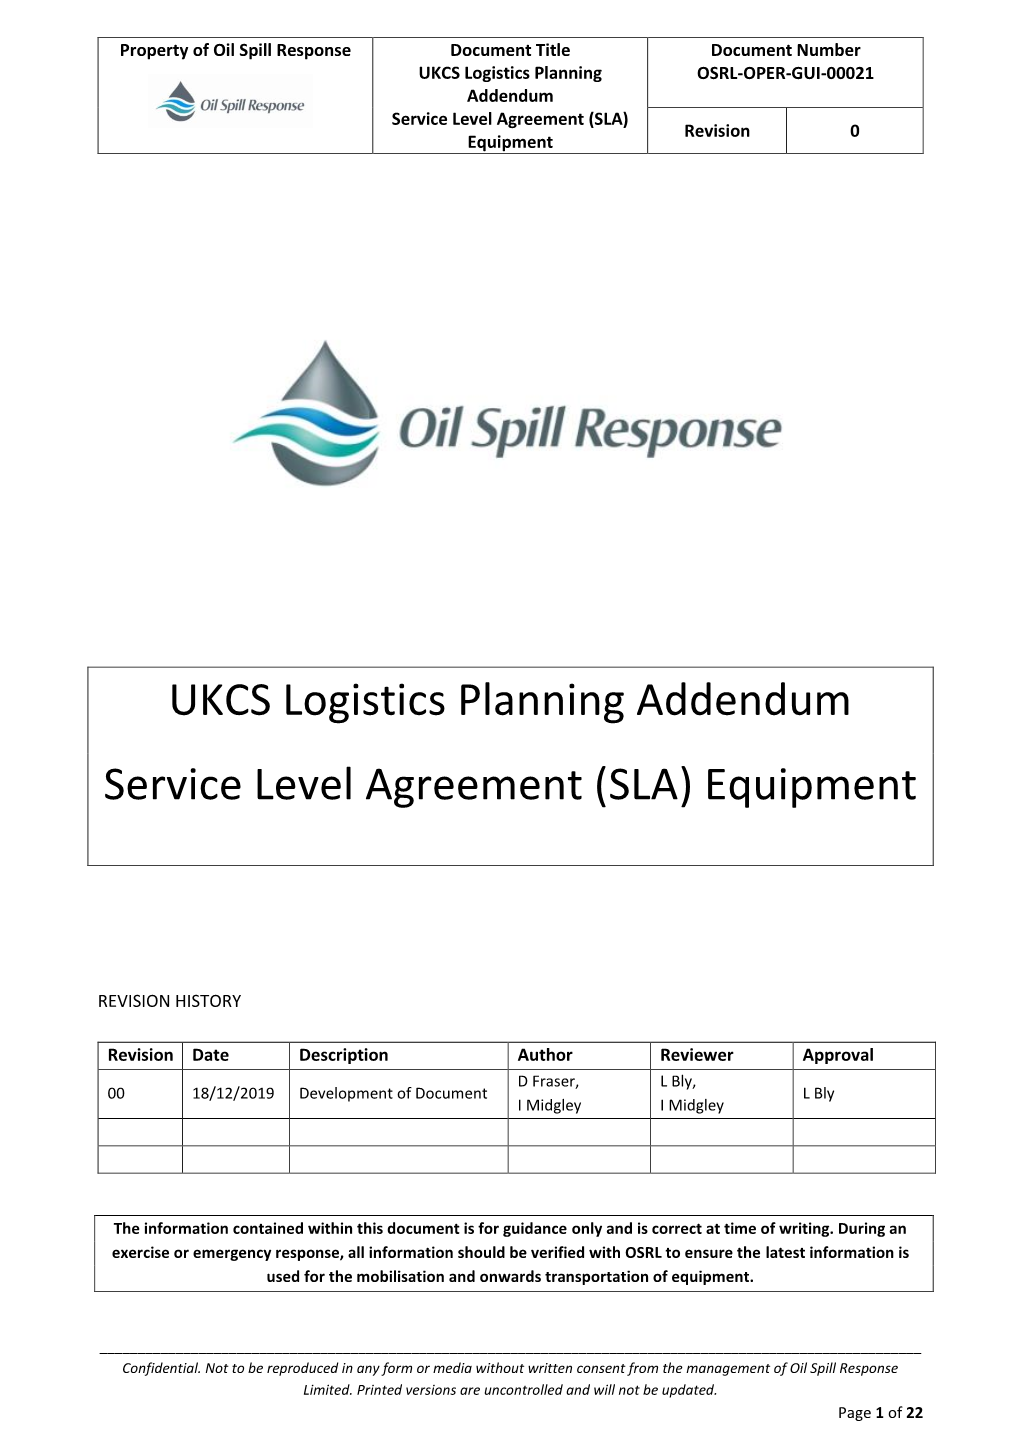 UKCS Logistics Planning Addendum Service Level Agreement (SLA) Equipment